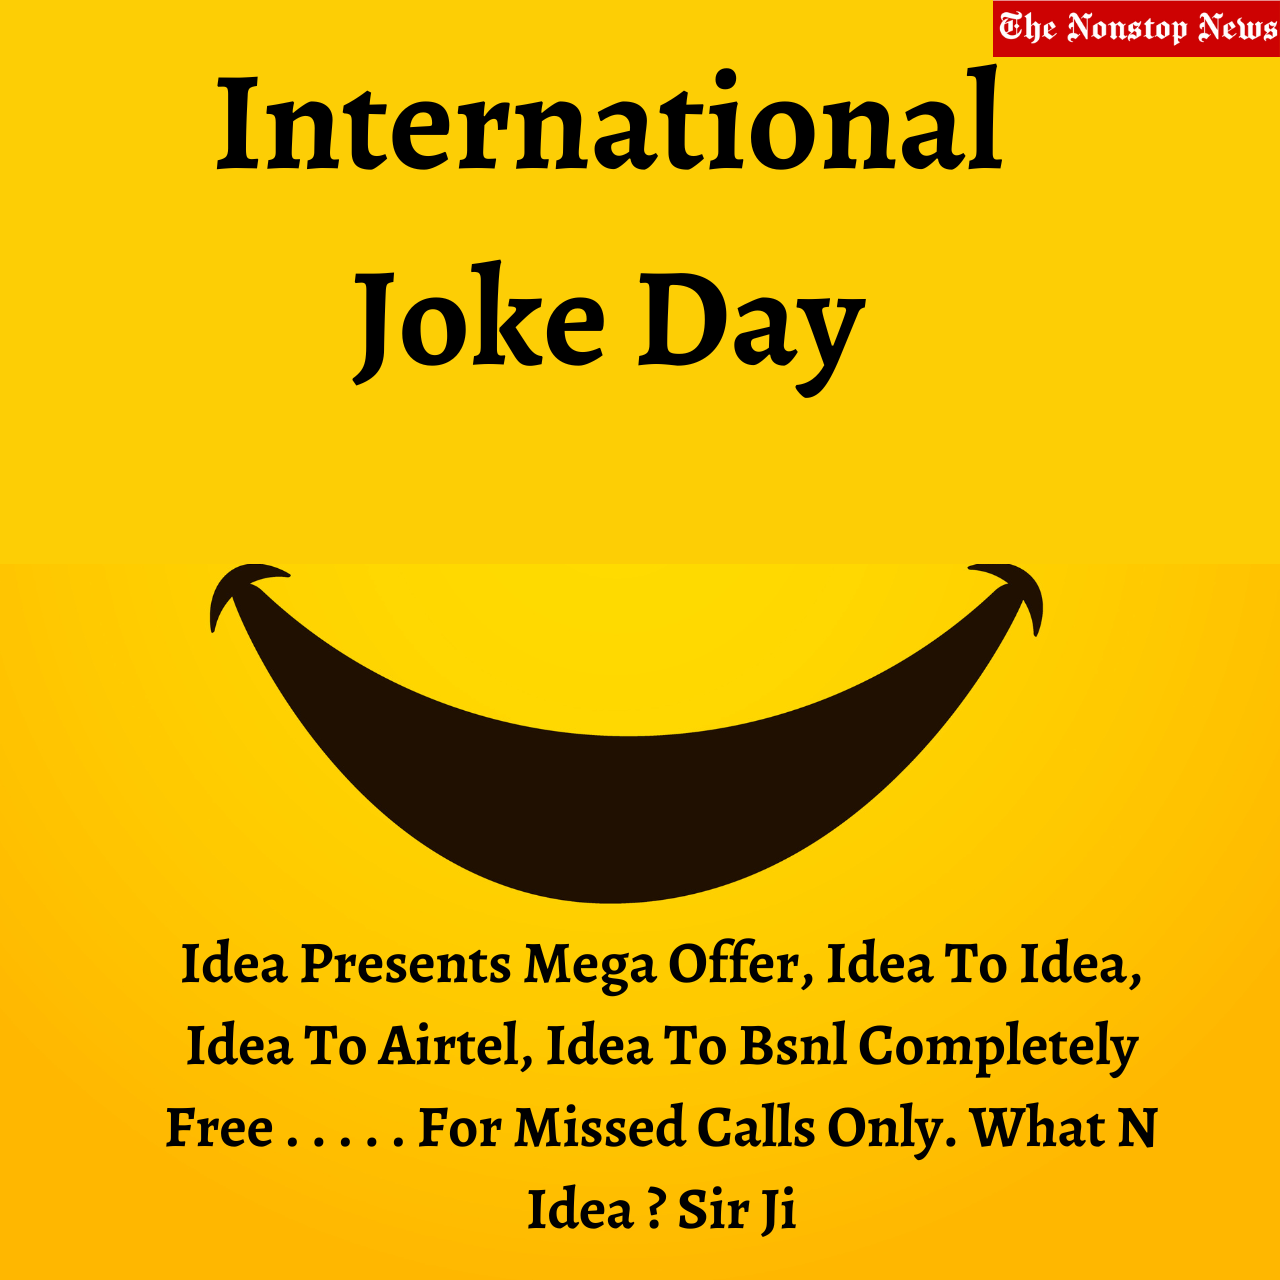 International Joke Day 2023 Hindi Images, Wishes, Greetings, Shayari, Sayings, Messages, Quotes, Captions and Funny Jokes